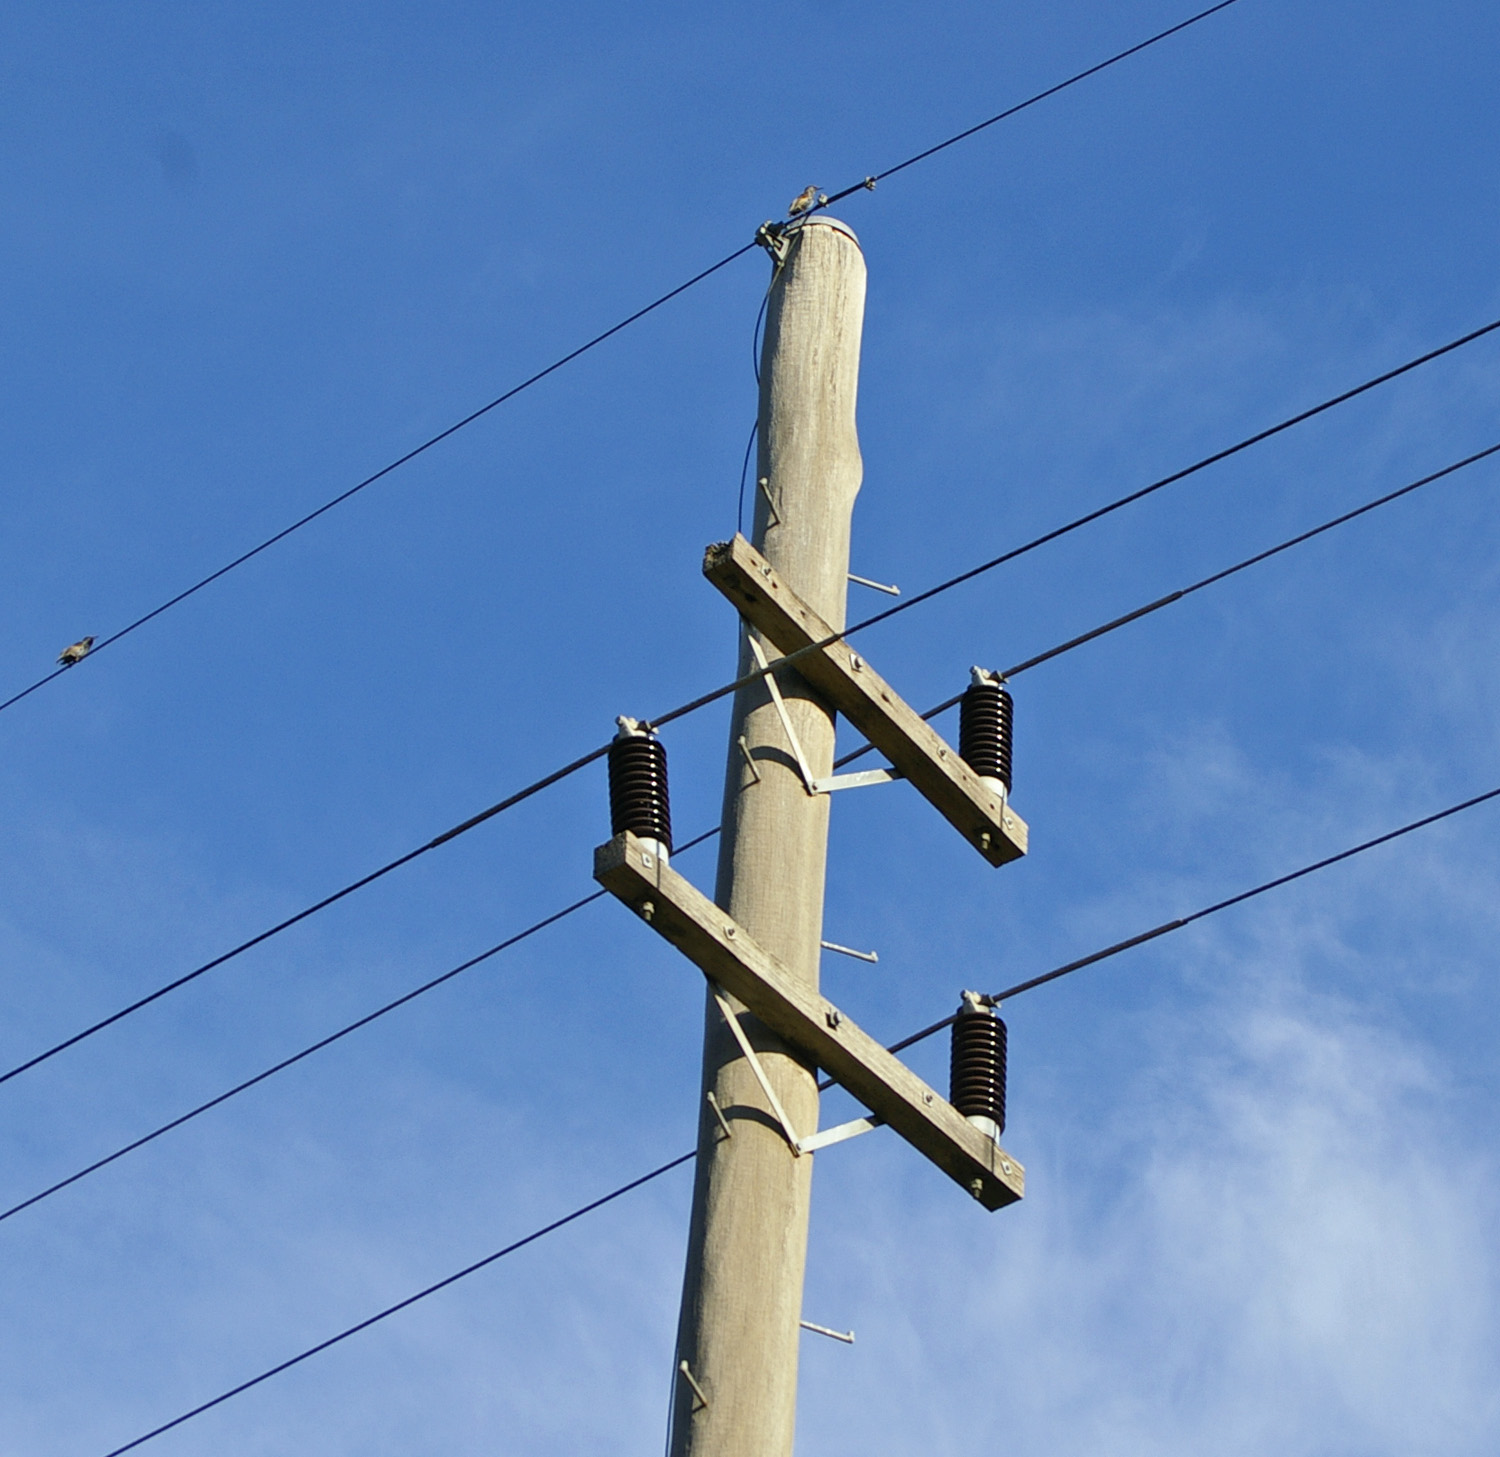 File:Two armed power pole 2.jpg - Wikimedia Commons